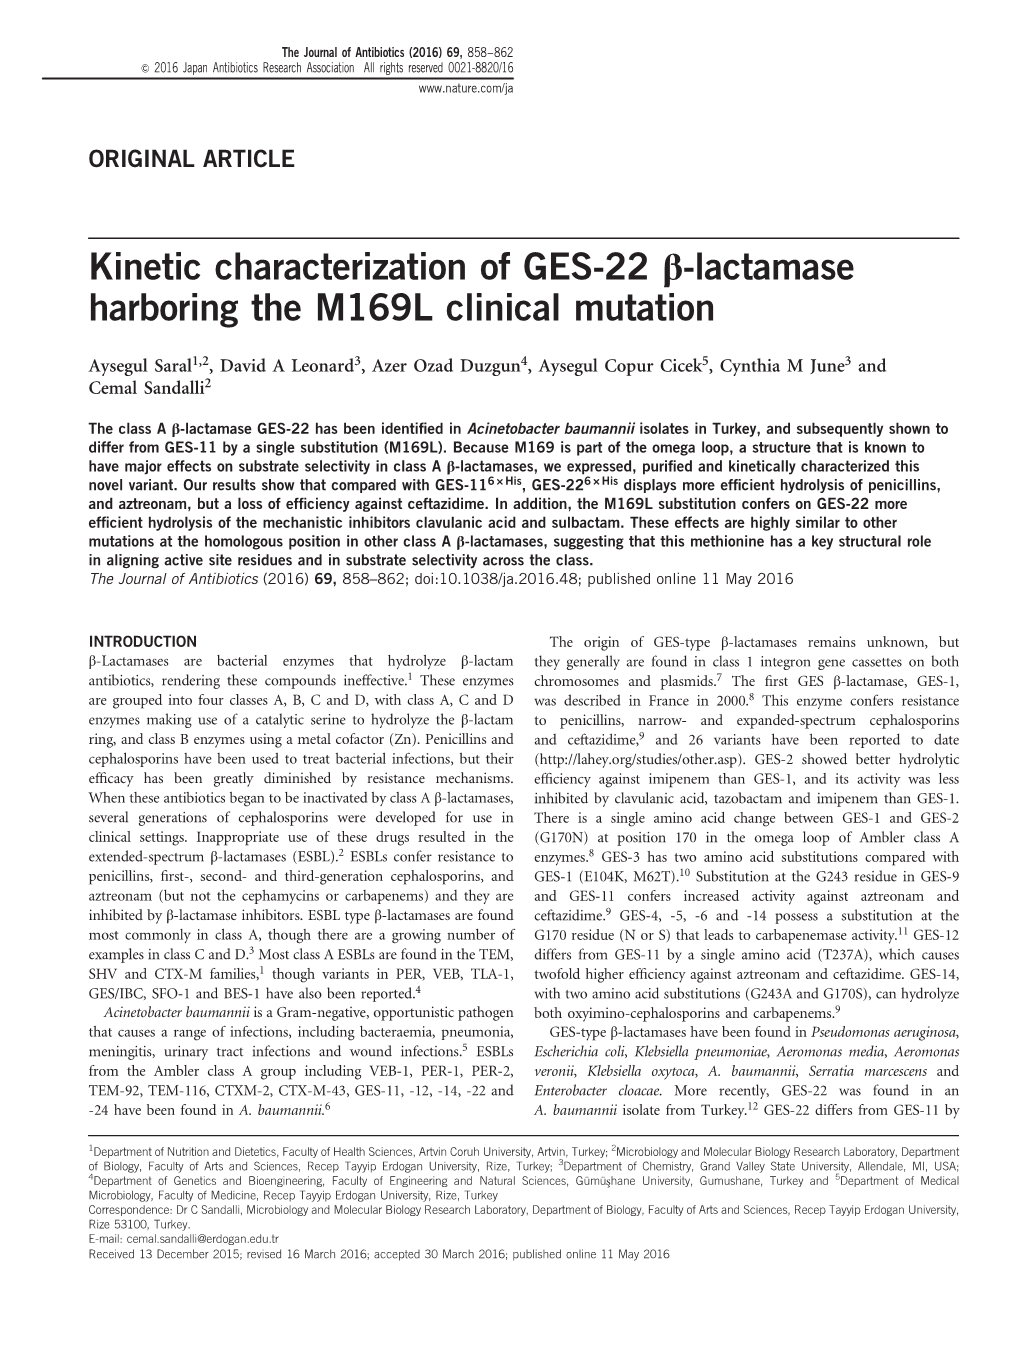 Lactamase Harboring the M169L Clinical Mutation